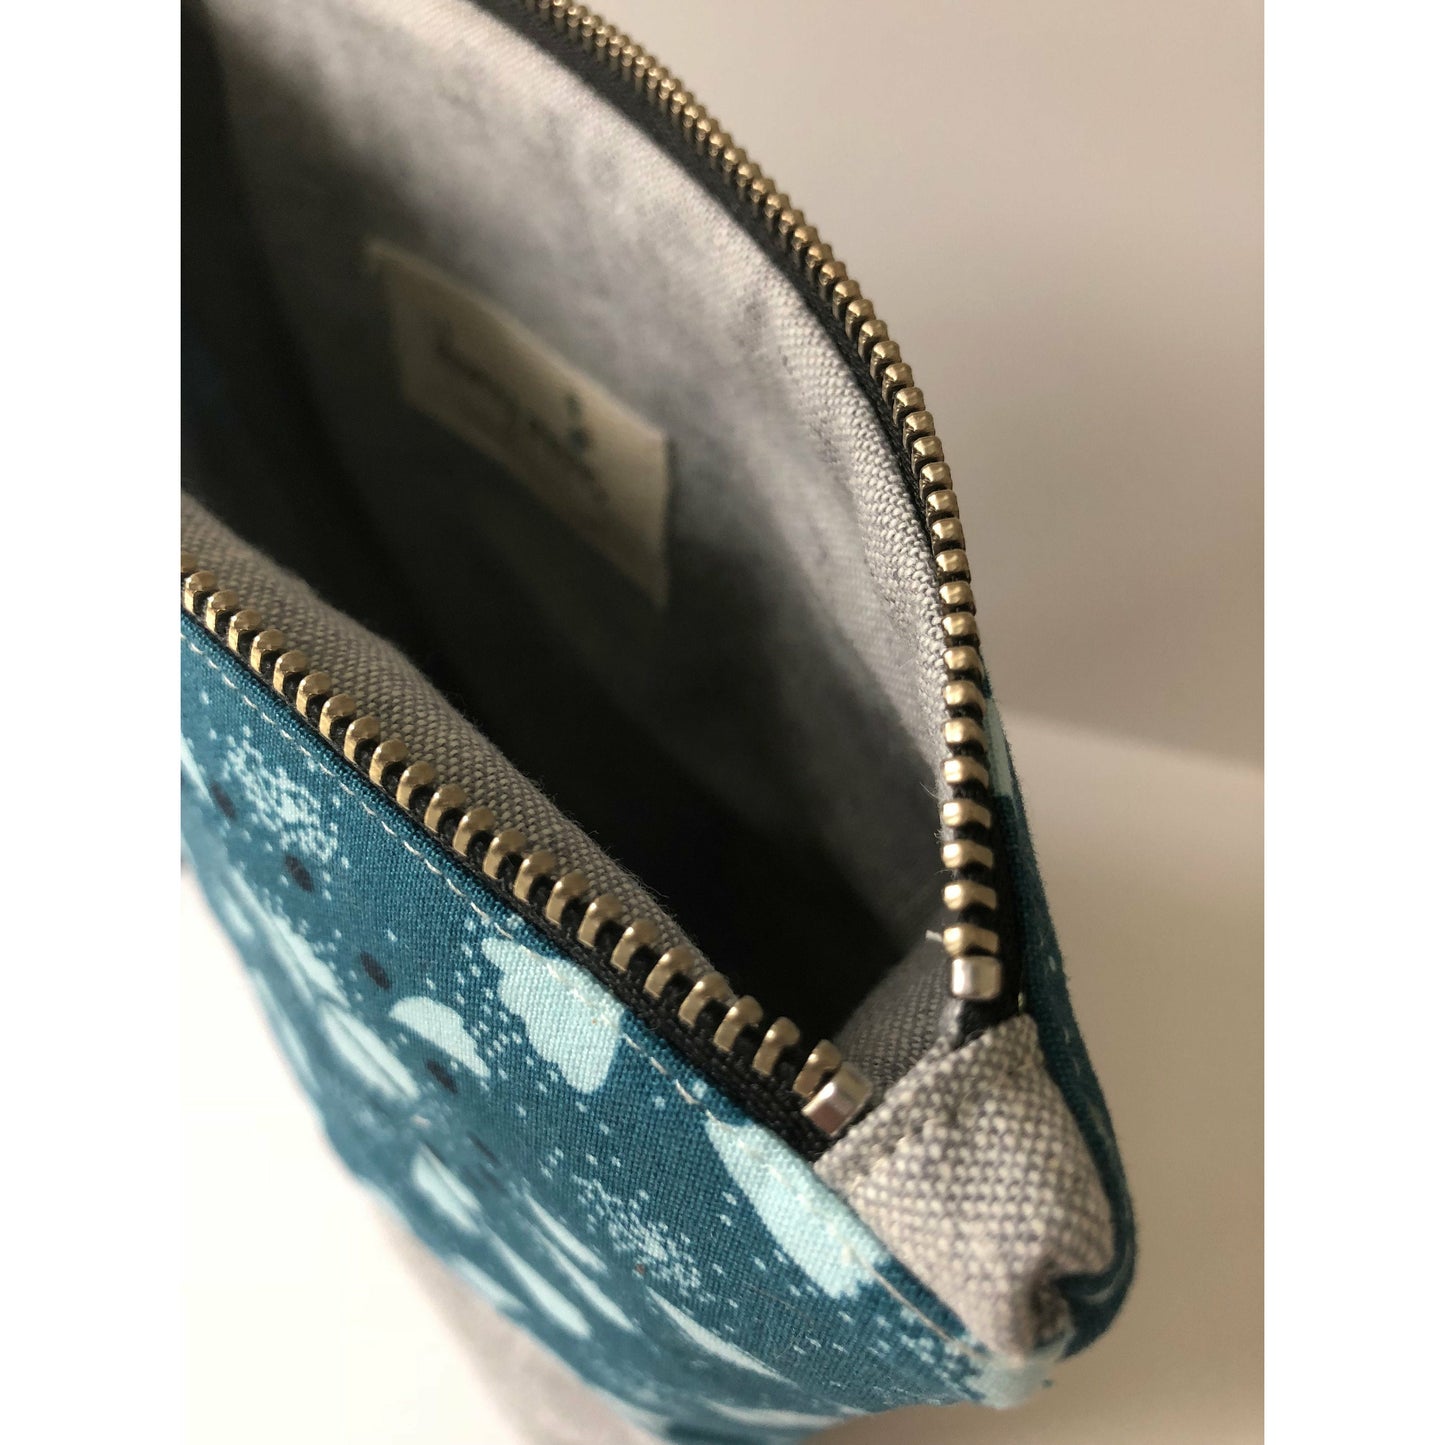 Project Bag, Knitting Bag, Medium Size Linen and Cotton Bag with YKK Metal Zipper- THE LORETTA